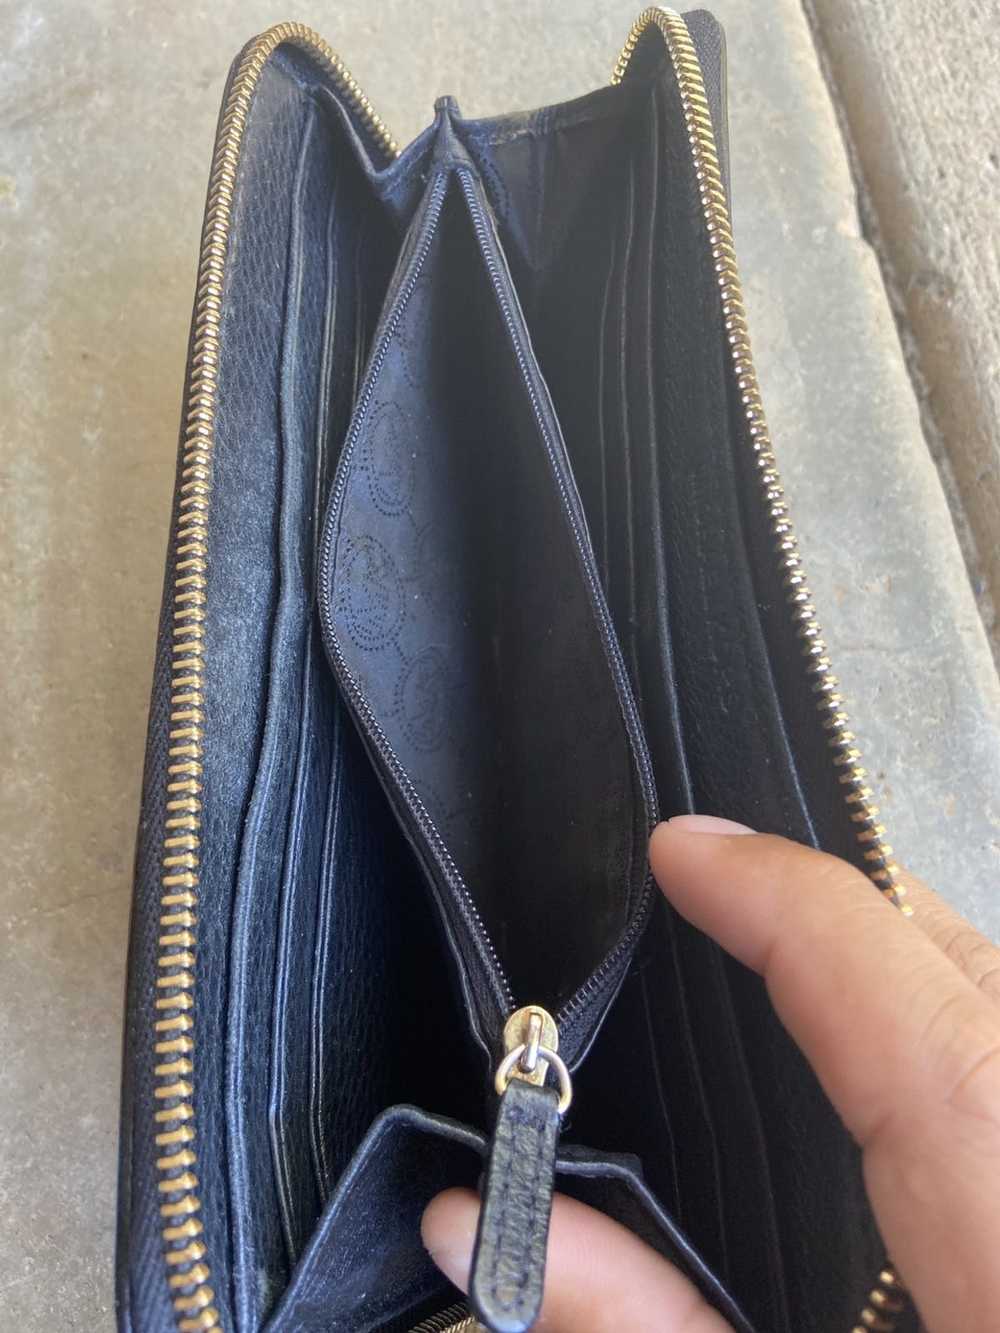 Michael Kors Michael kors wallet - image 8